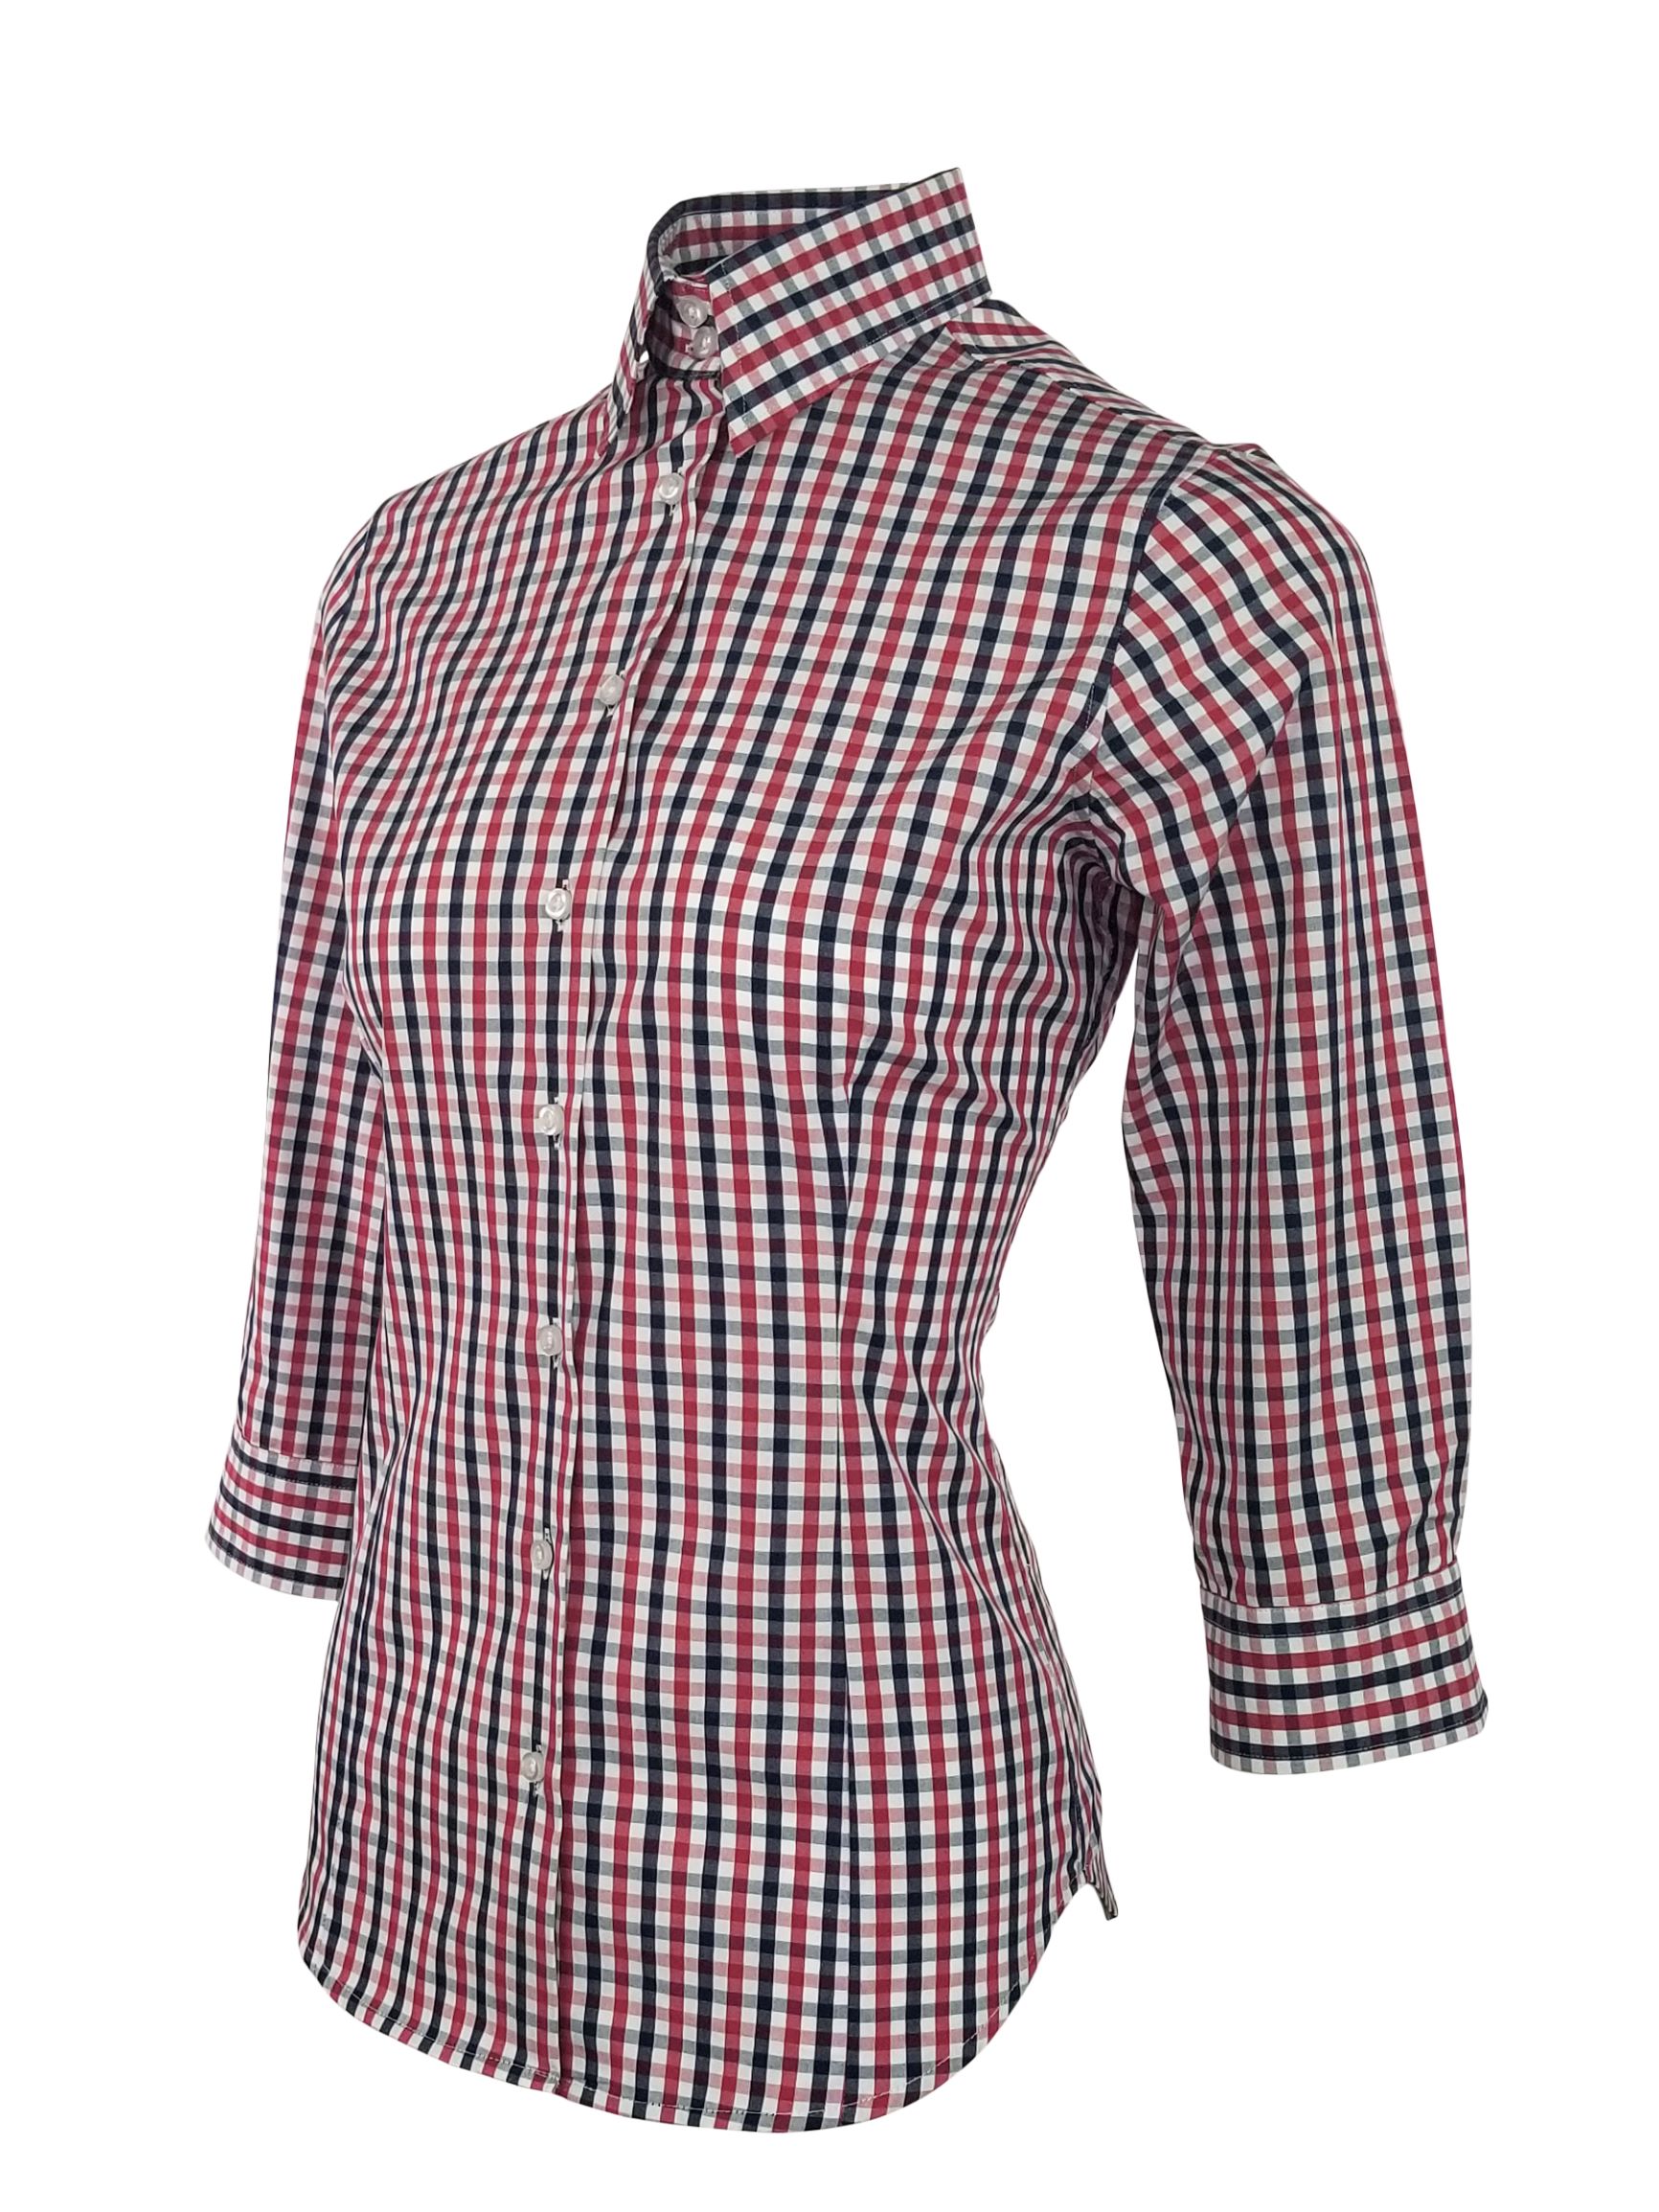 Women's Be Bold Shirt - Red Navy Check Three Quarter Sleeve | Uniform Edit